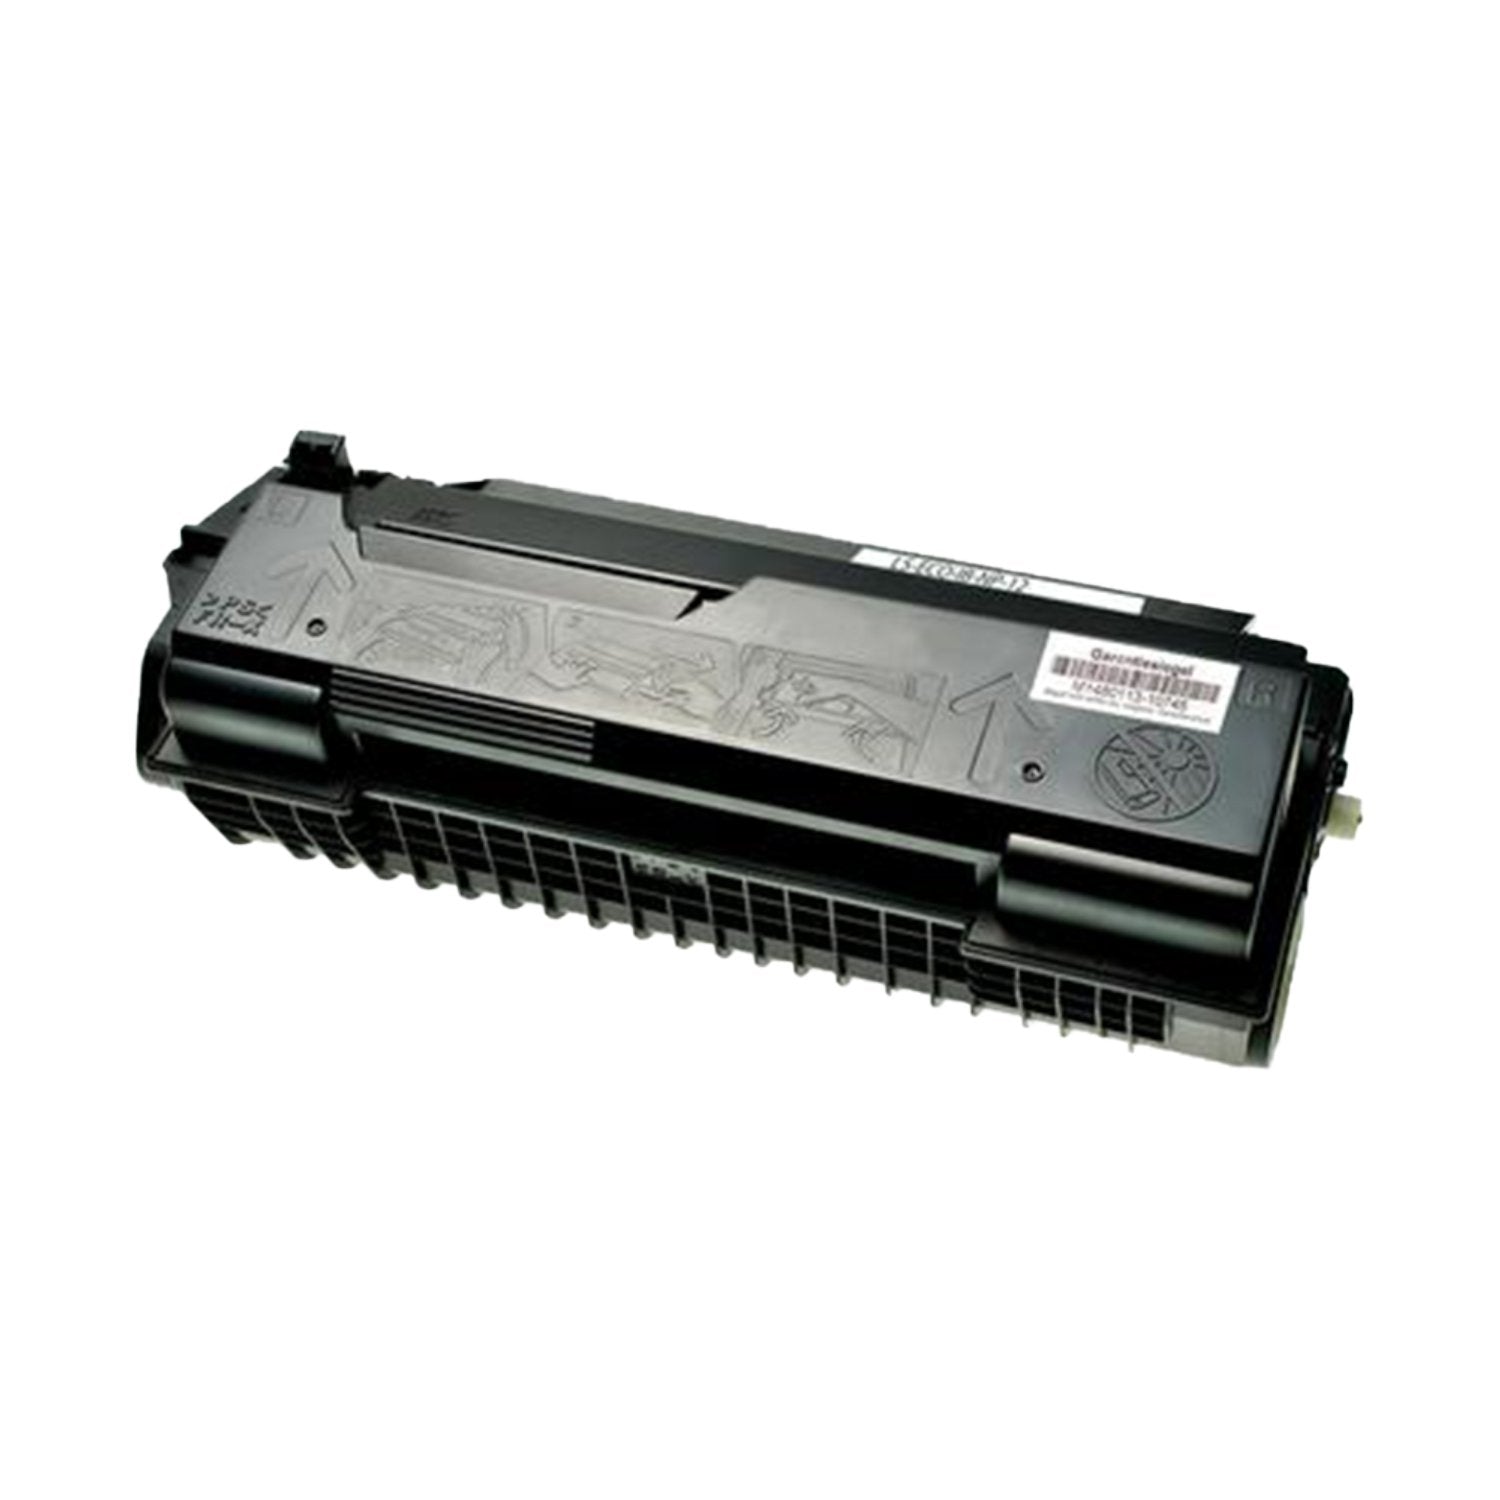 Absolute Toner Compatible IBM 63H3005 Black Toner Cartridge | Absolute Toner IBM Toner Cartridges